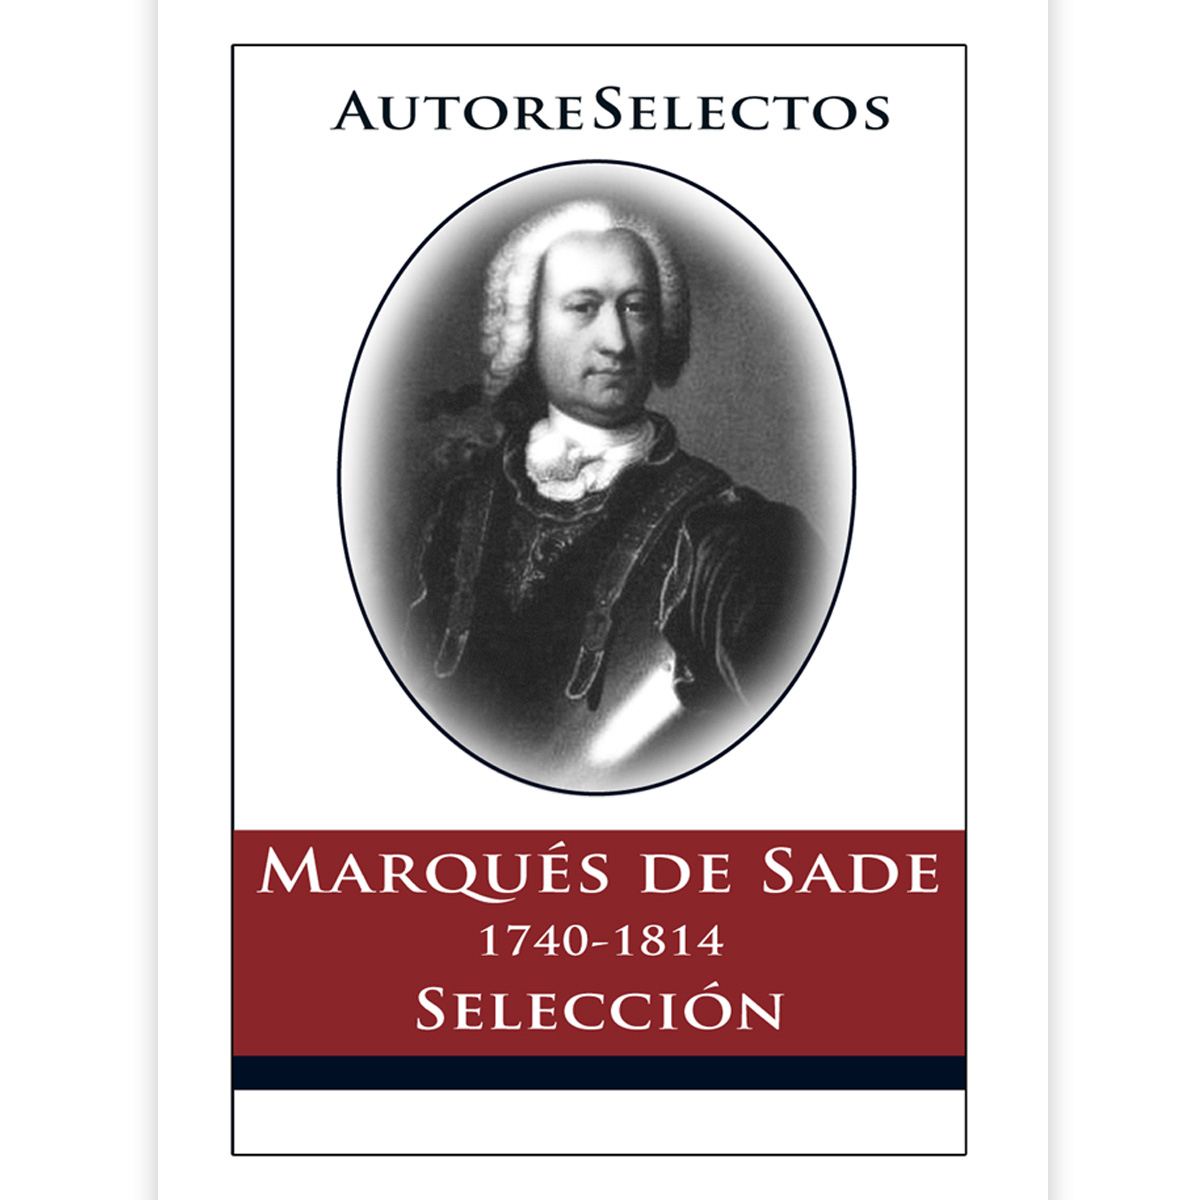 Marques de Sade - Autores selectos